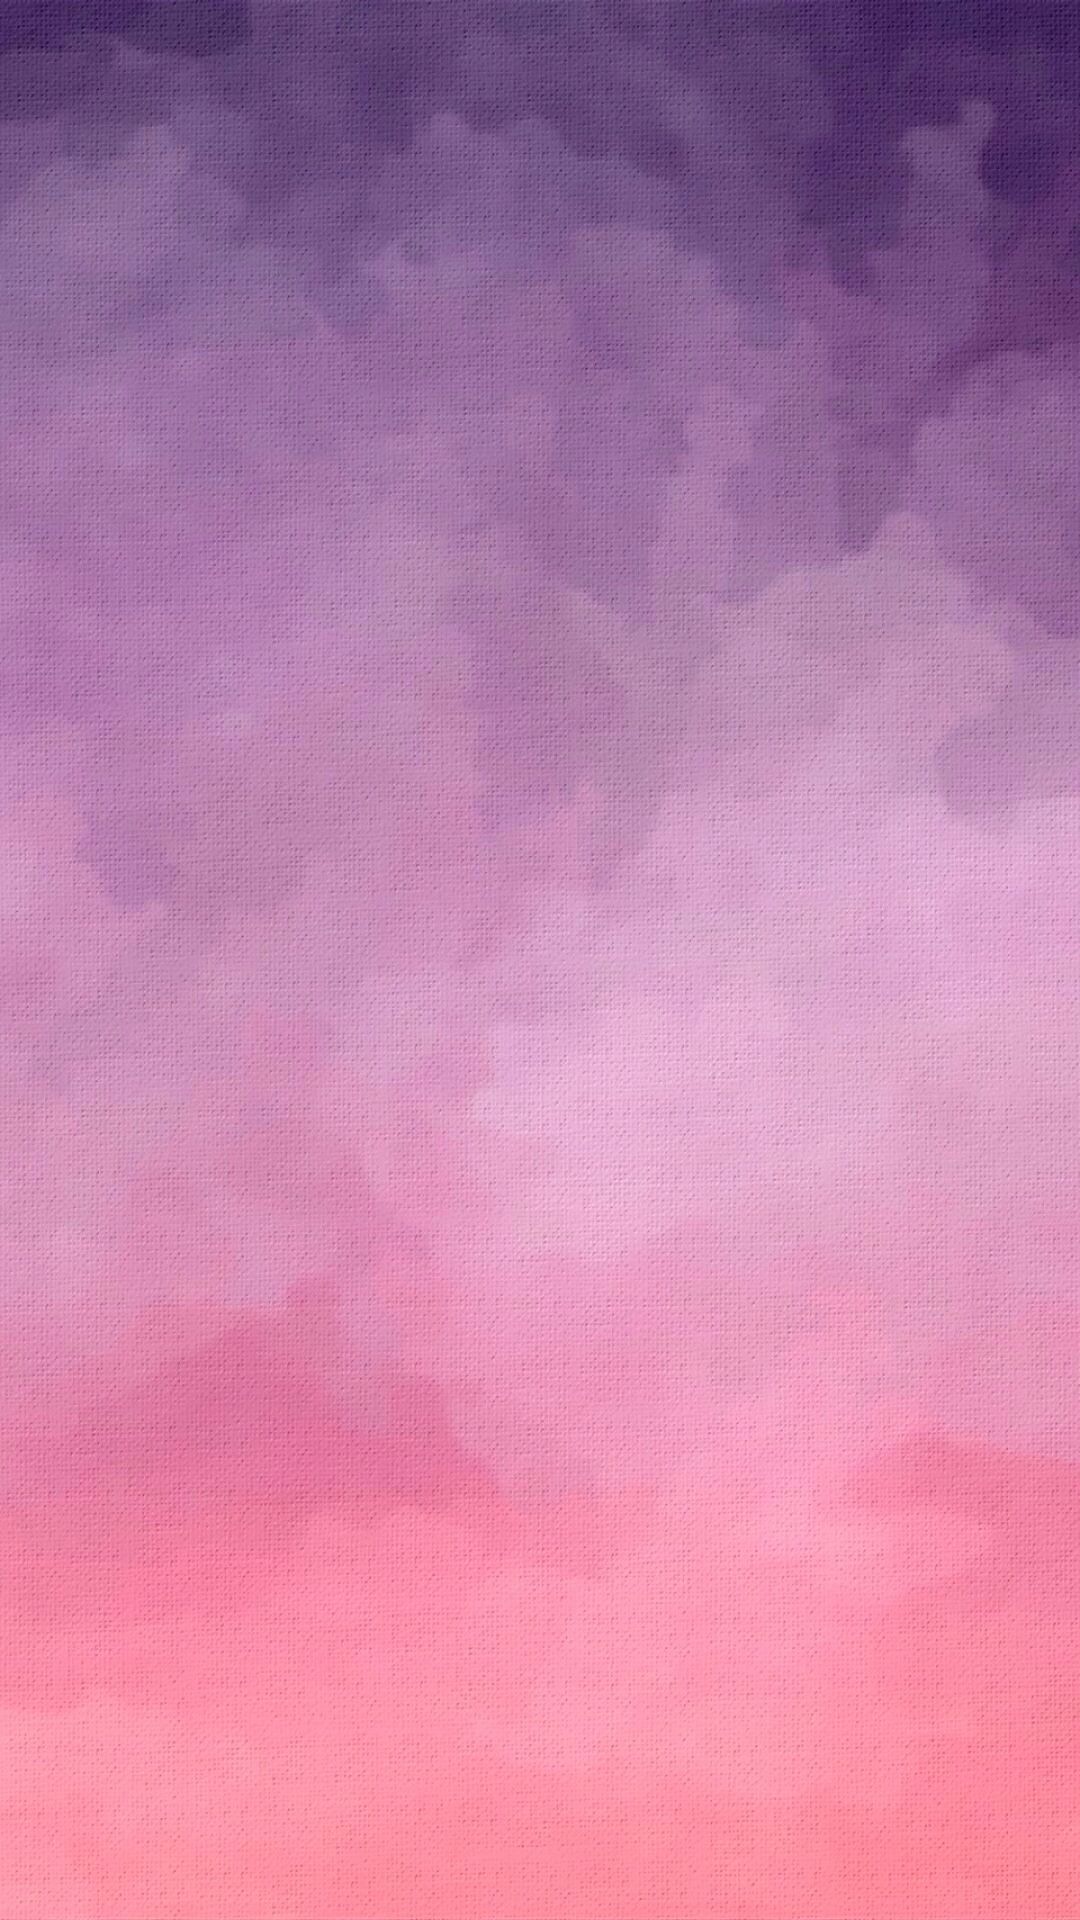 Pink Wallpaper for Phone New Free Cute Phone Wallpaper